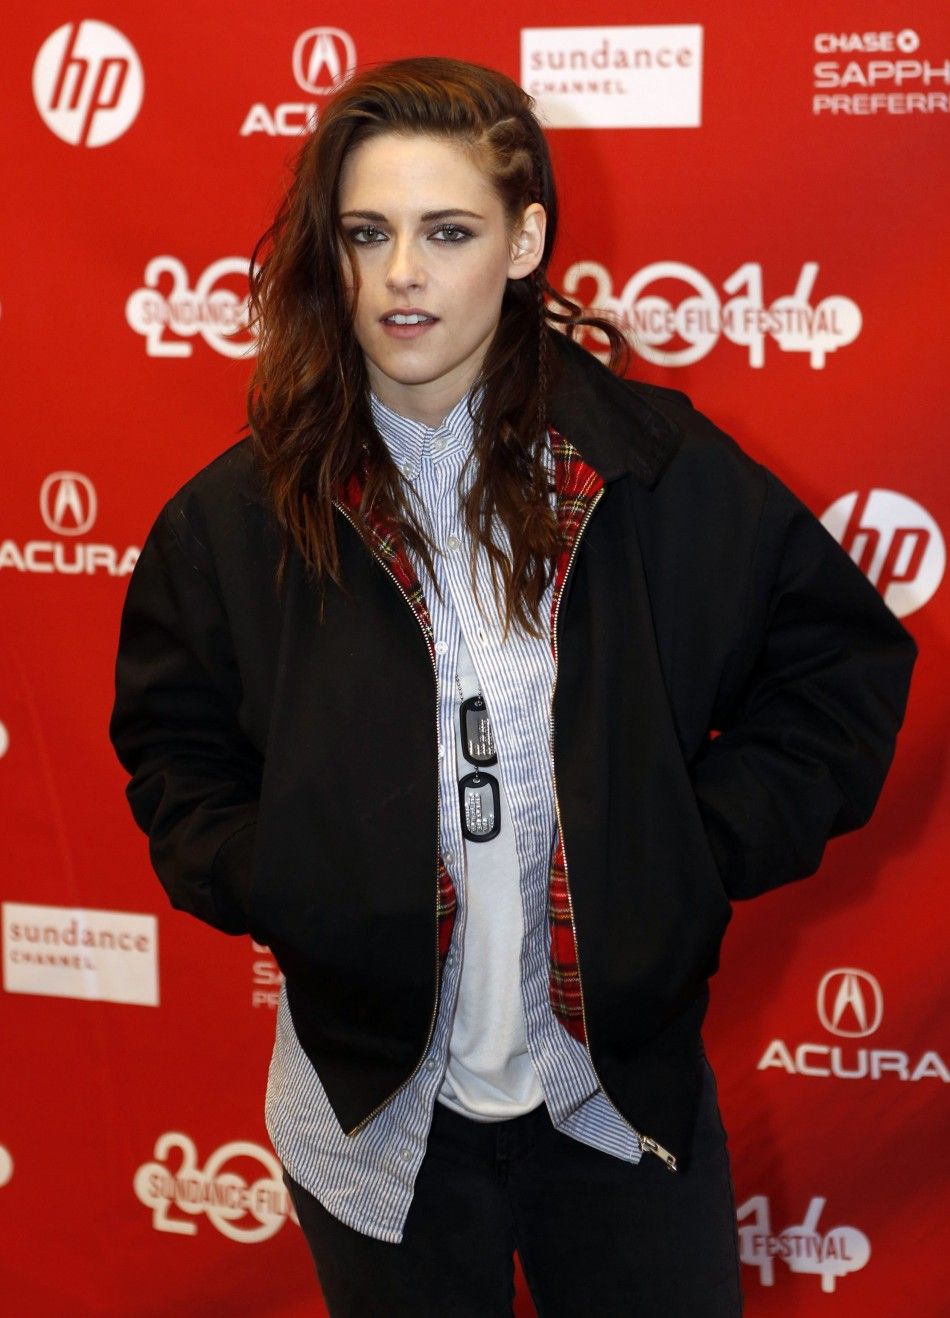 Kristen Stewart Promotes New Film Camp X-Ray at the 2014 Sundance Film Festival in Utah